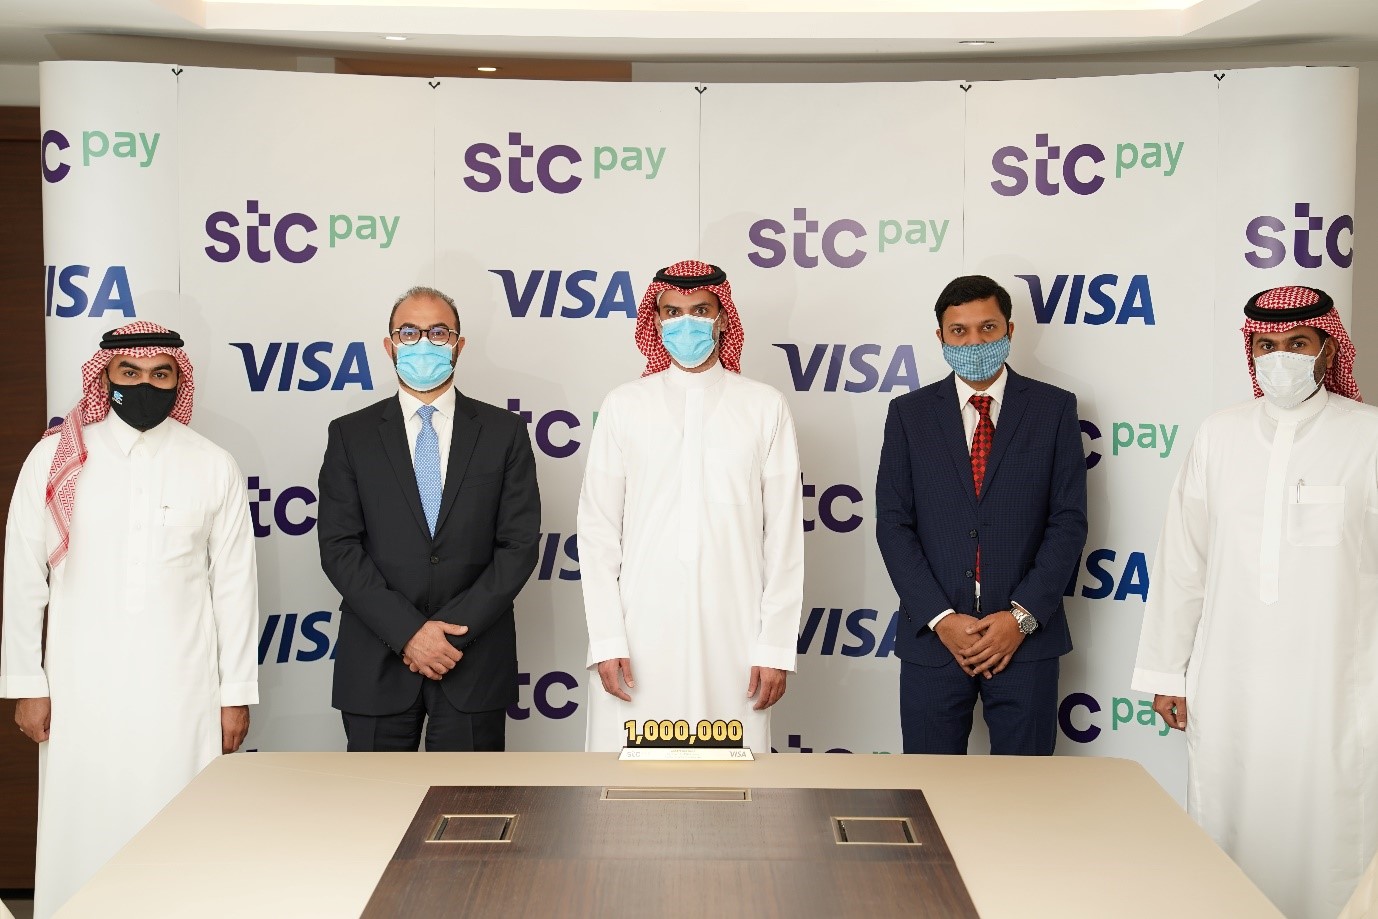 stc pay تصدر مليون بطاقة Visa خلال 4 أشهر